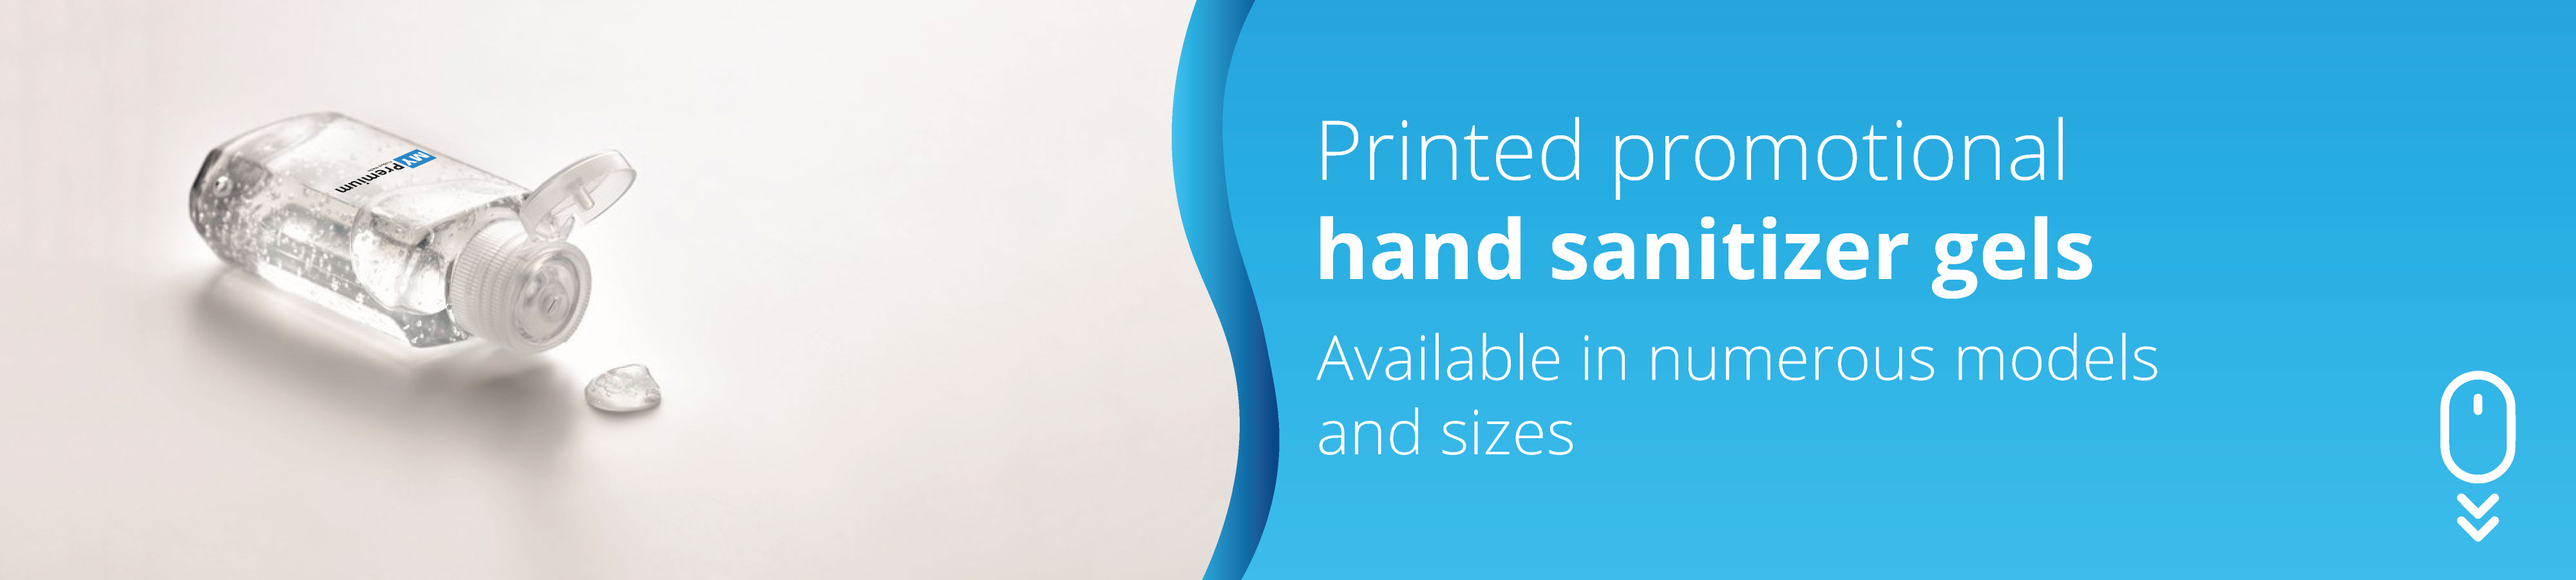 printed-promotional-hand-sanitizer-gel